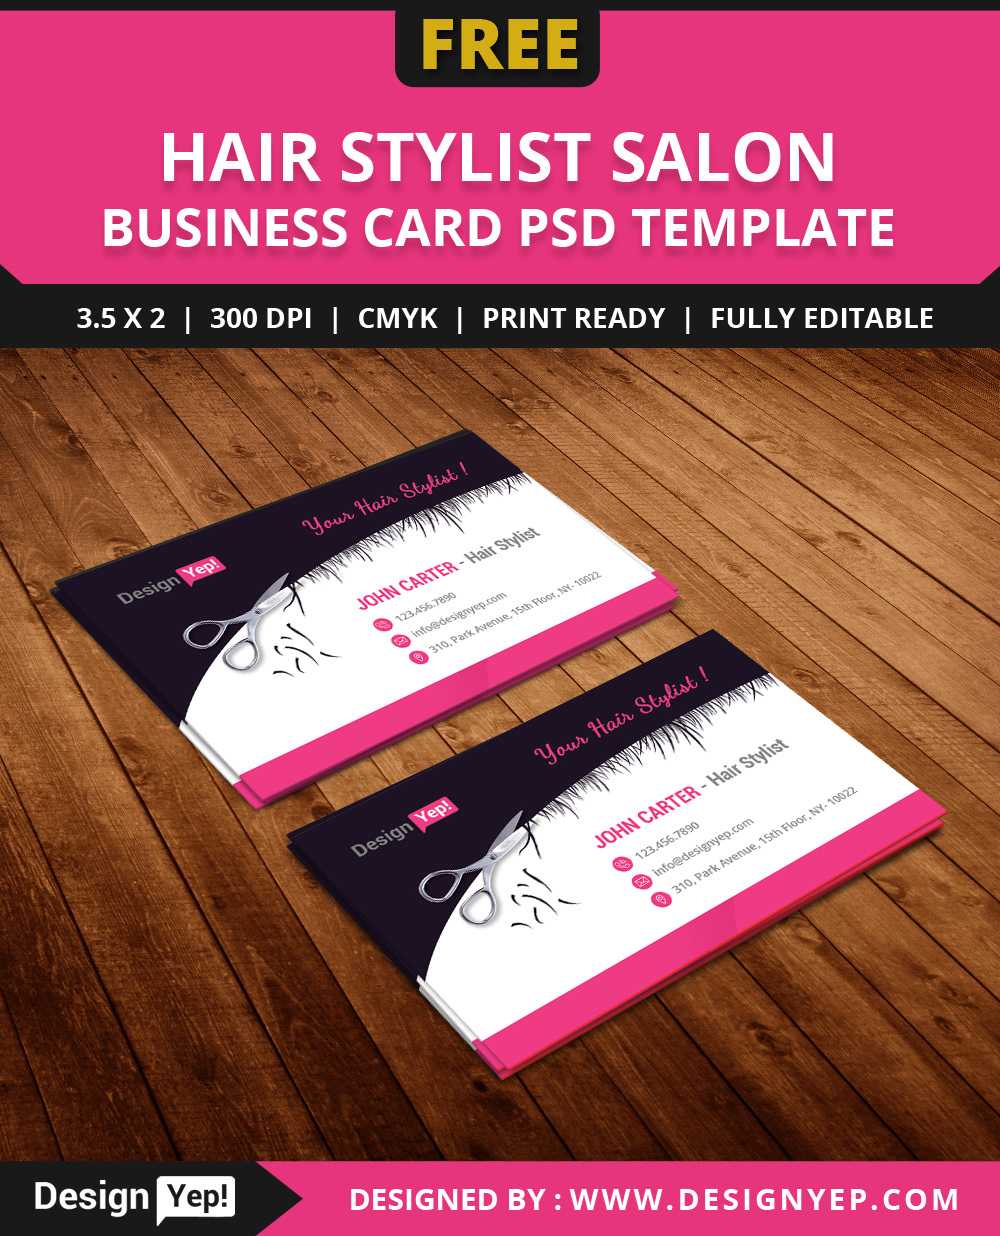 Free Hair Stylist Salon Business Card Template Psd On Behance With Hair Salon Business Card Template